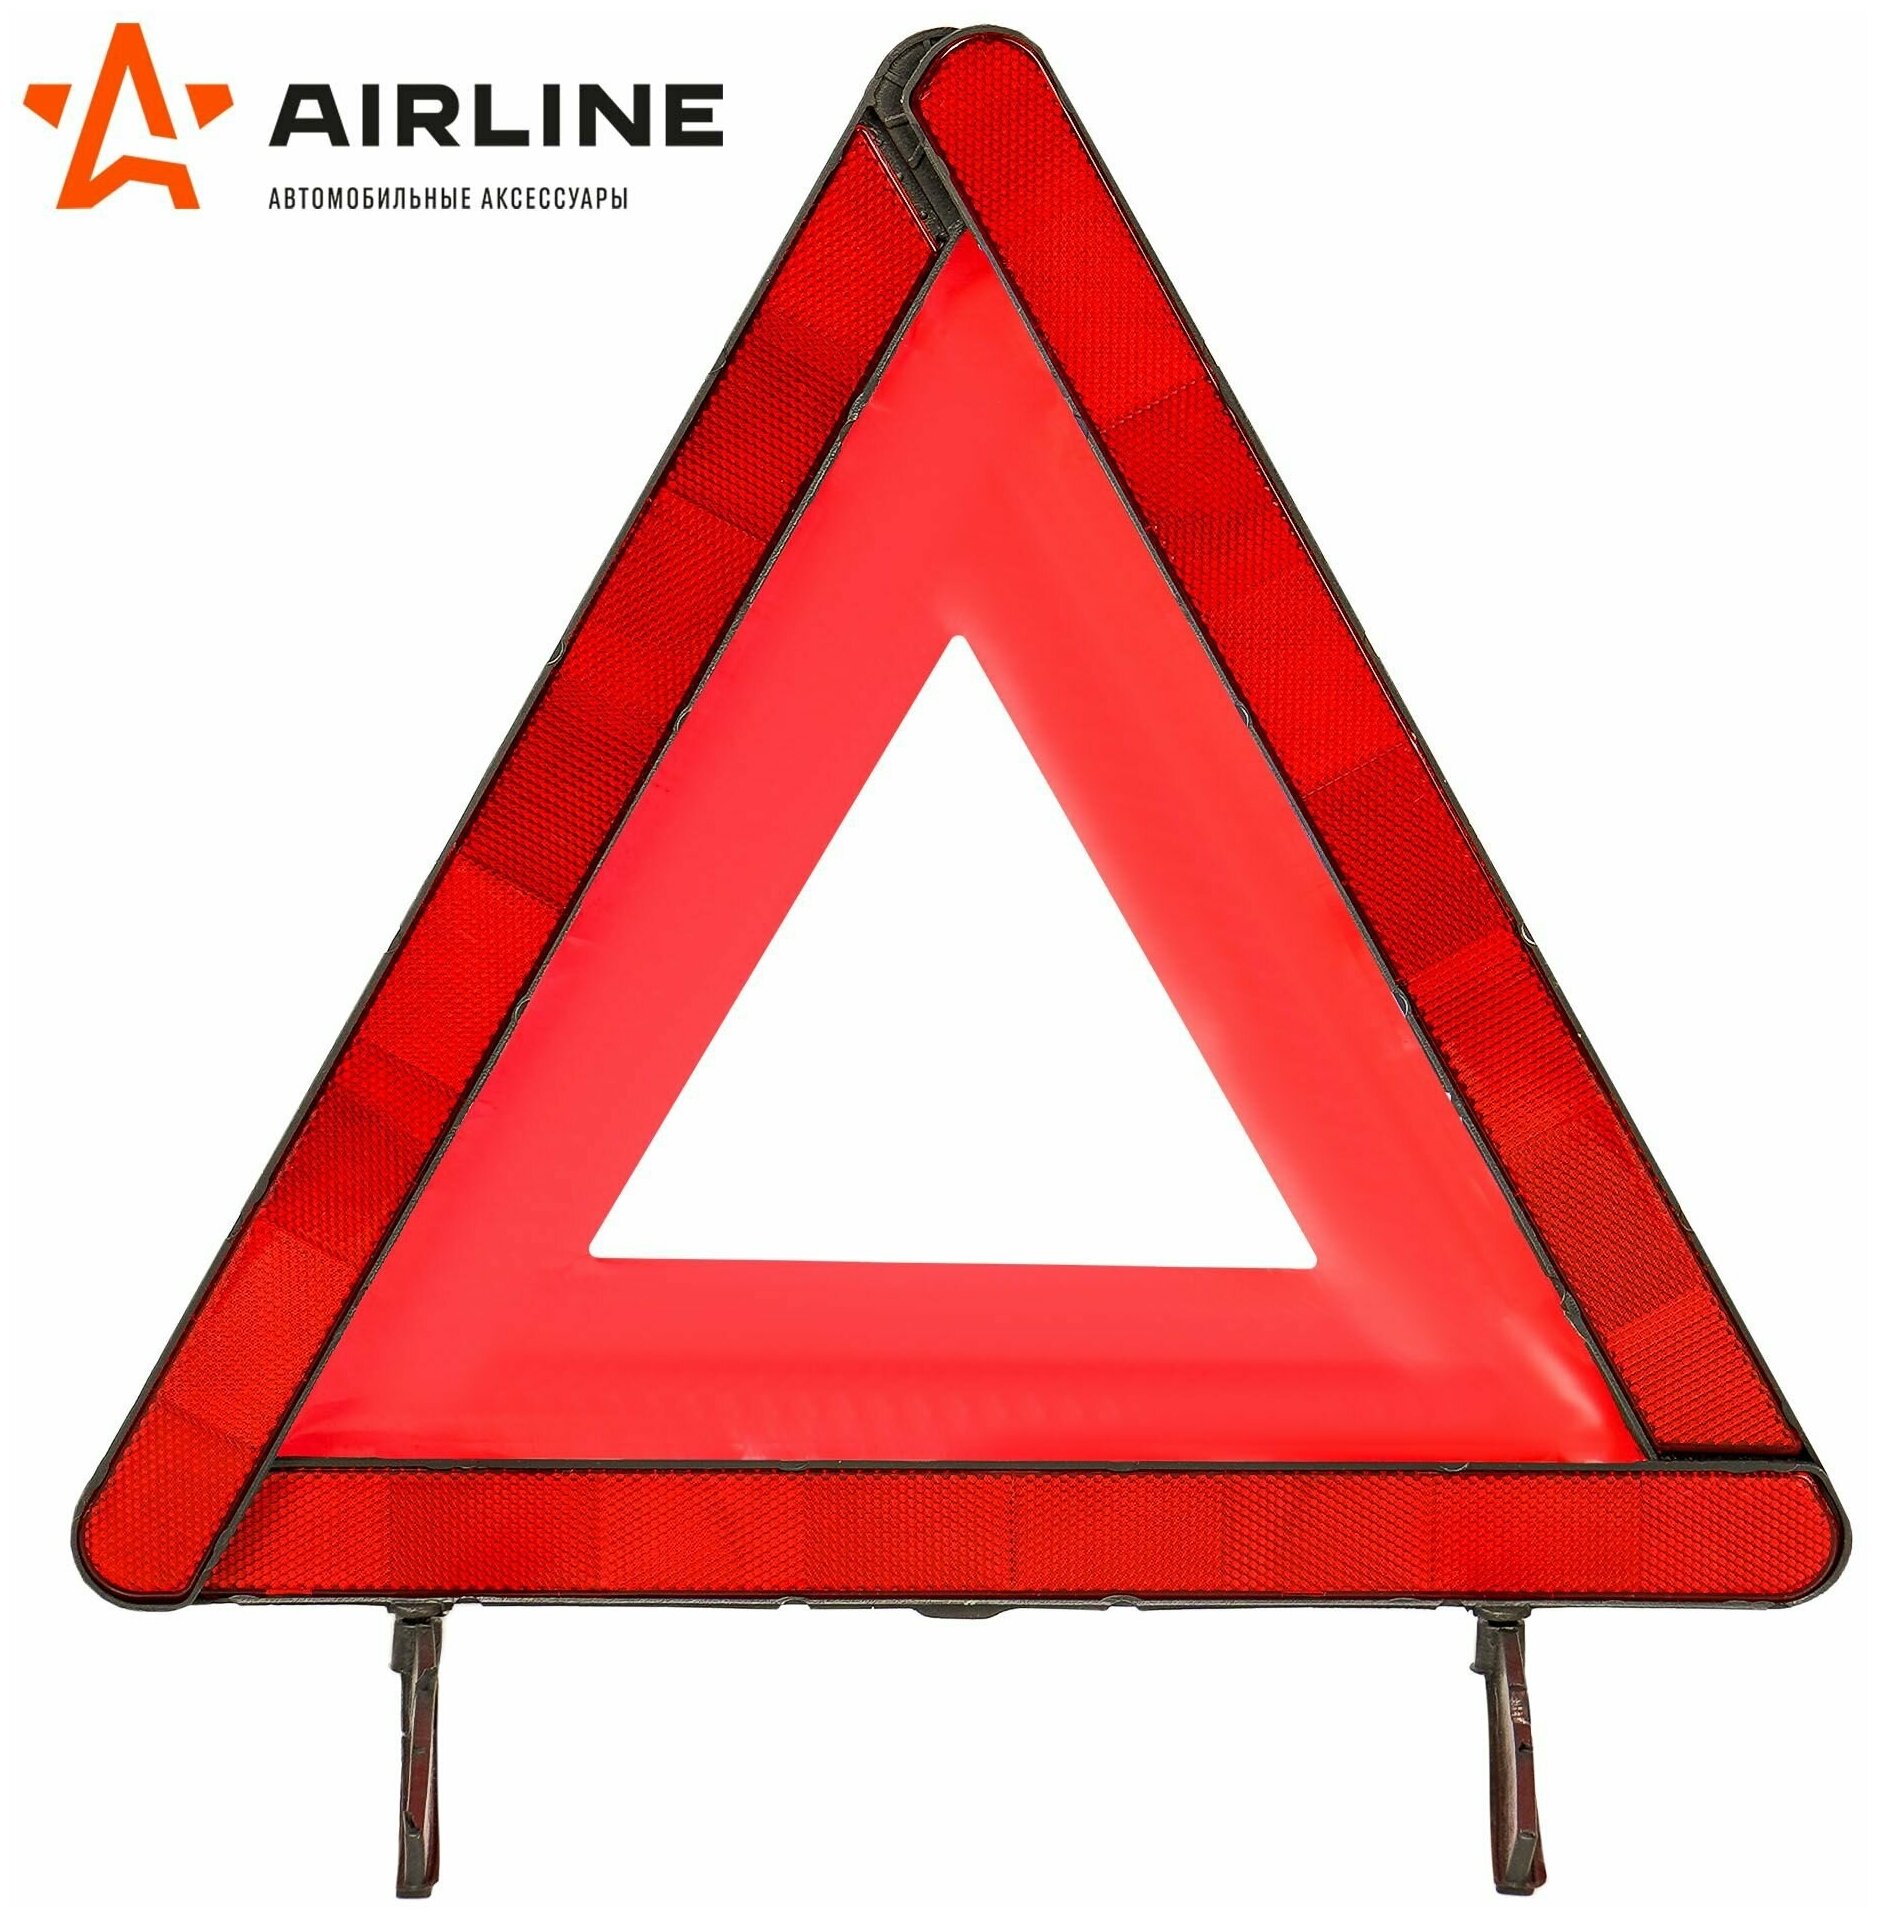 Знак аварийной остановки Airline - фото №2